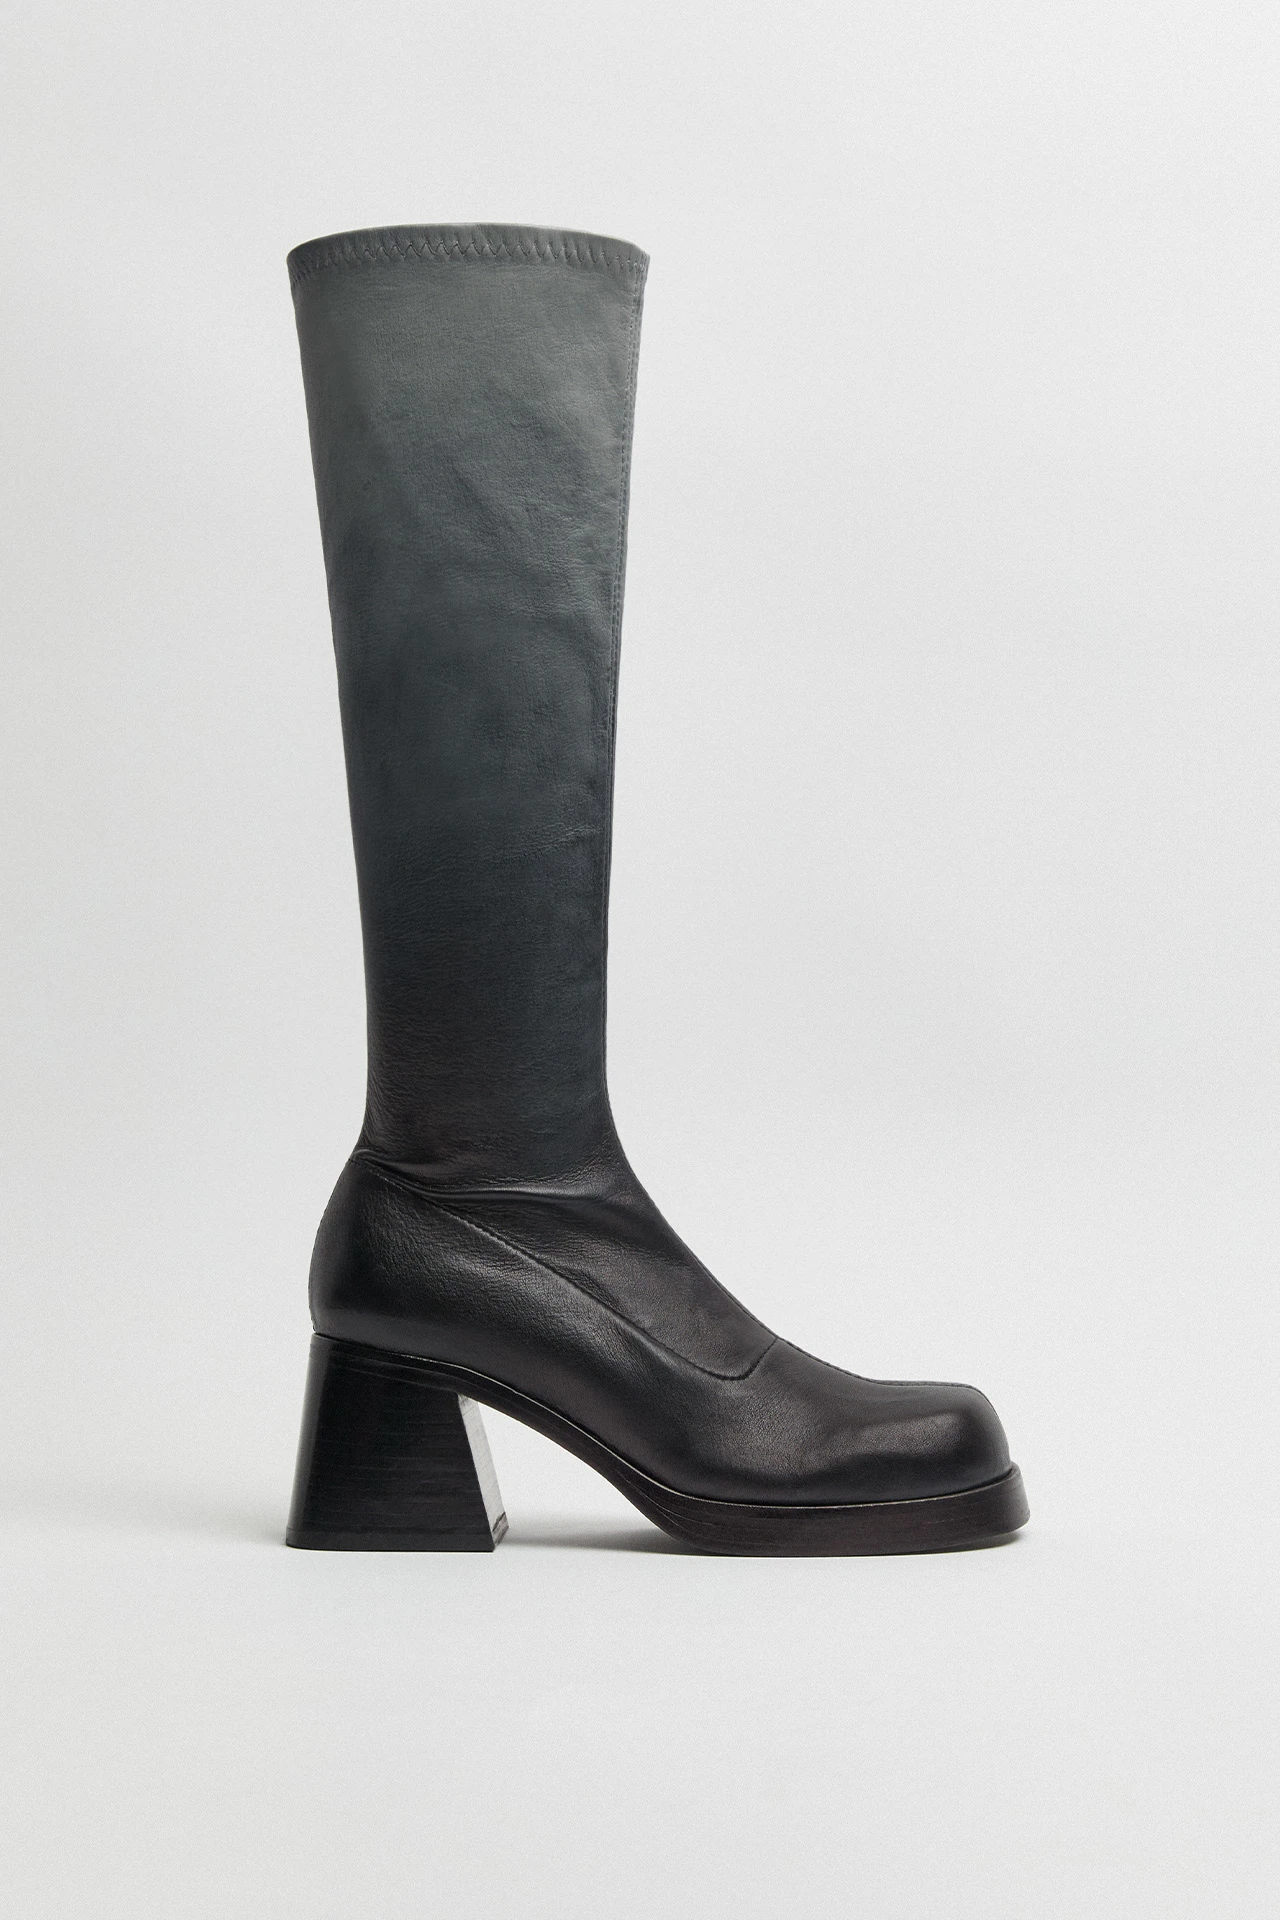 Miista-hedy-grey-degrade-tall-boots-01